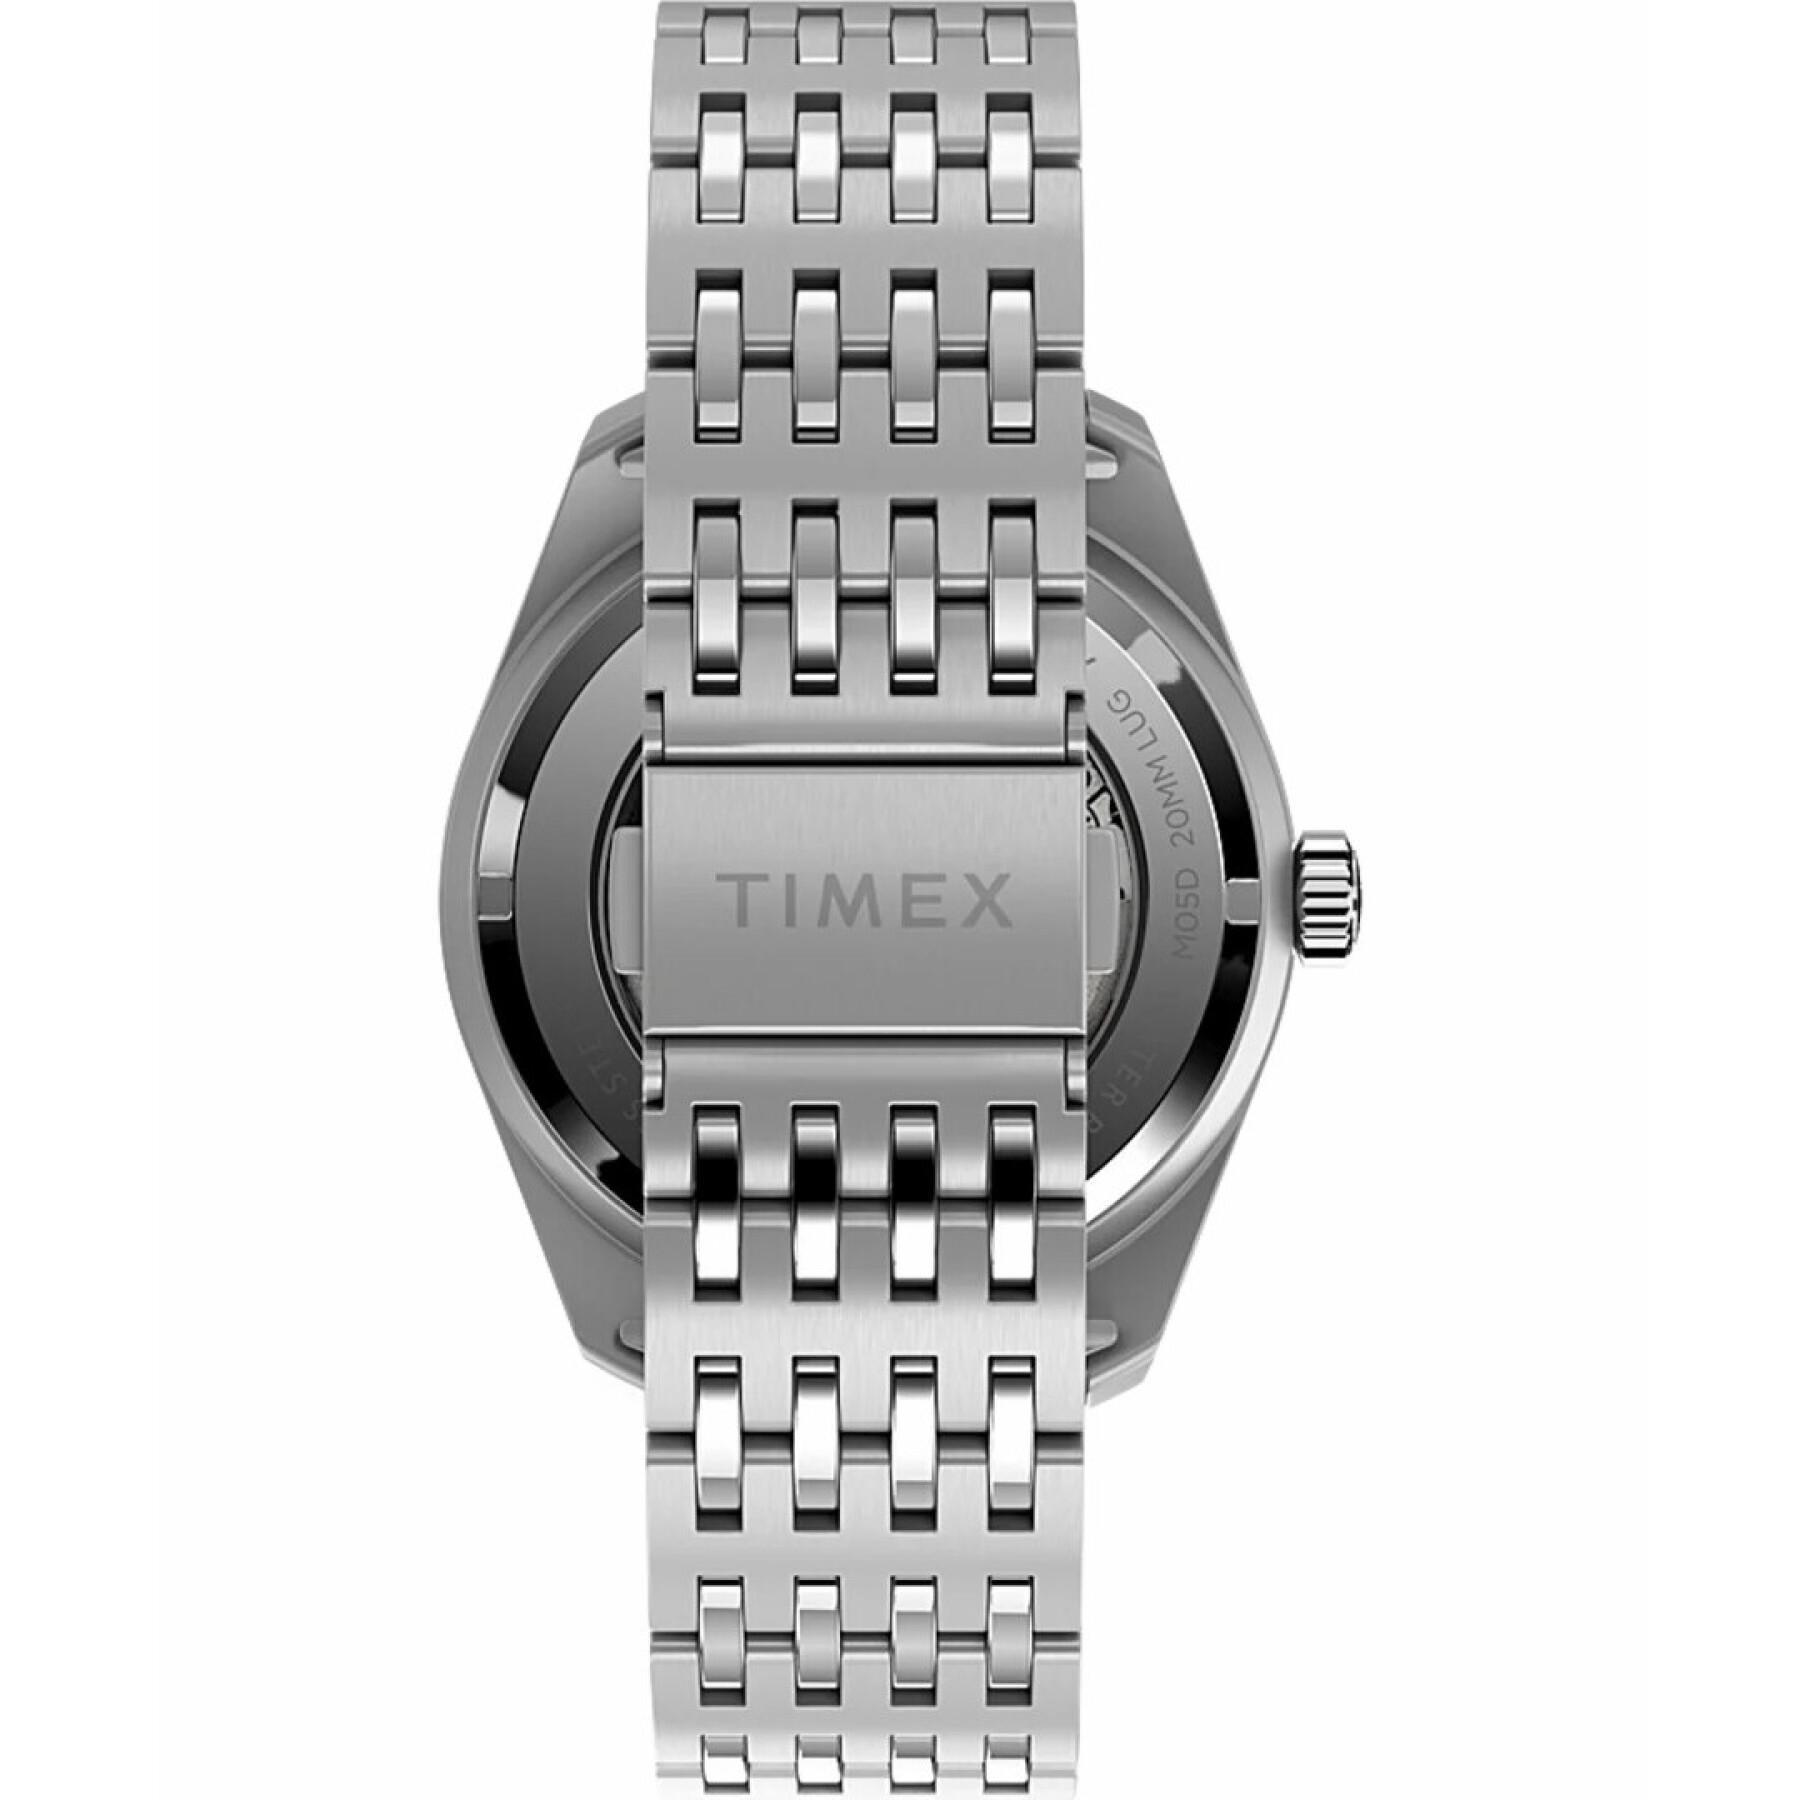 Watch Timex M79 Automatic